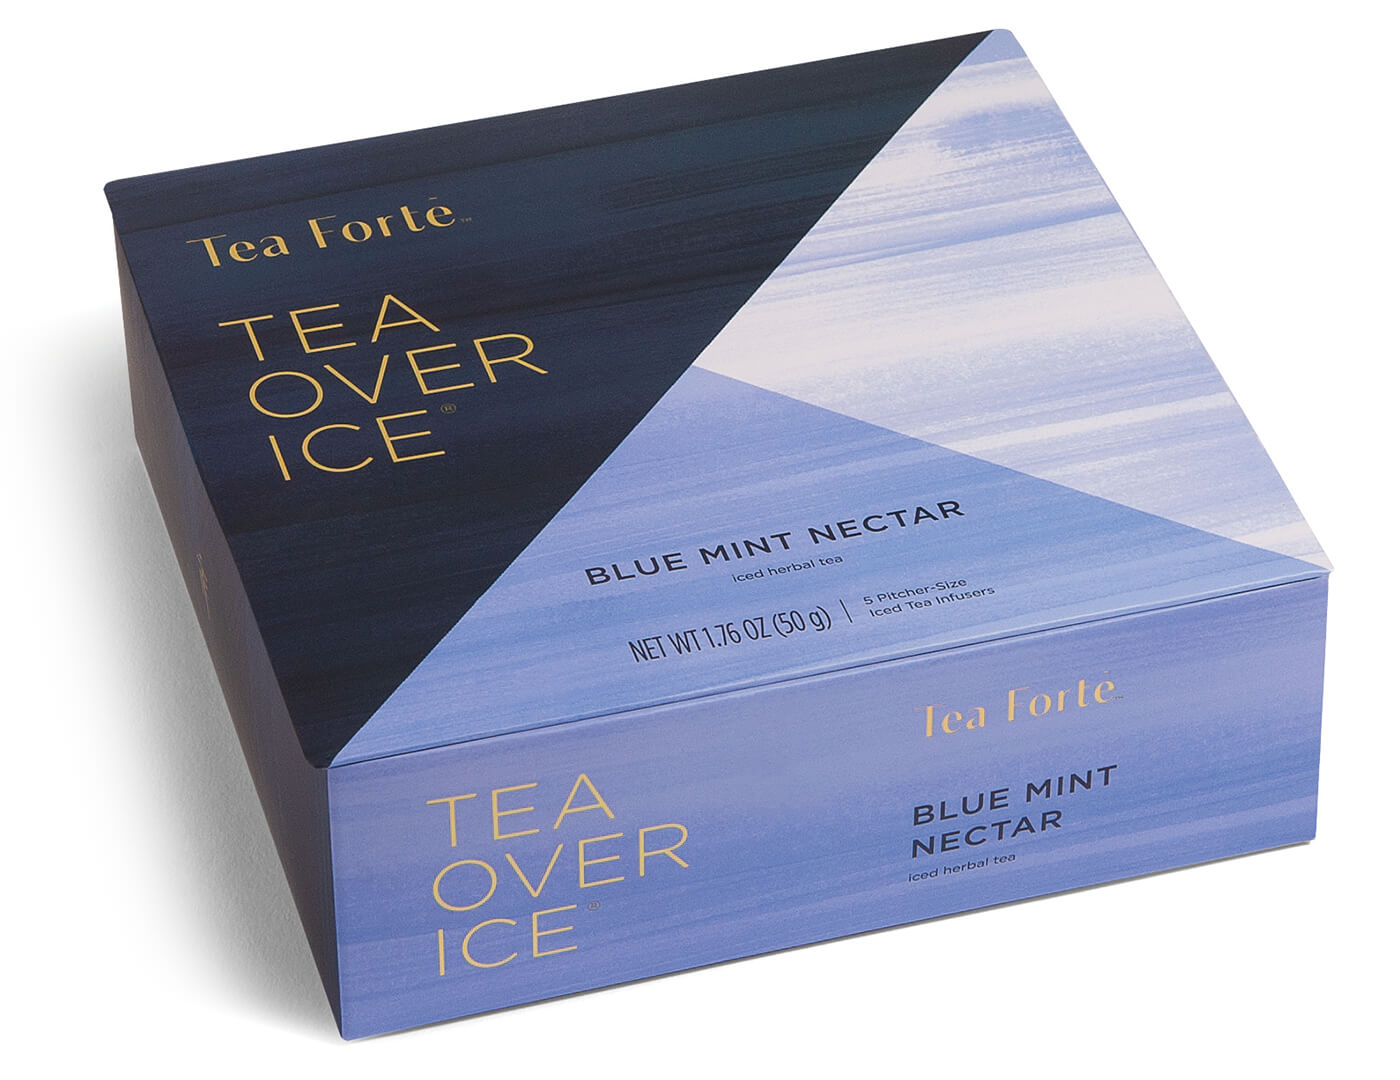 Closed box of Blue Mint Nectar Tea Over Ice 5pk